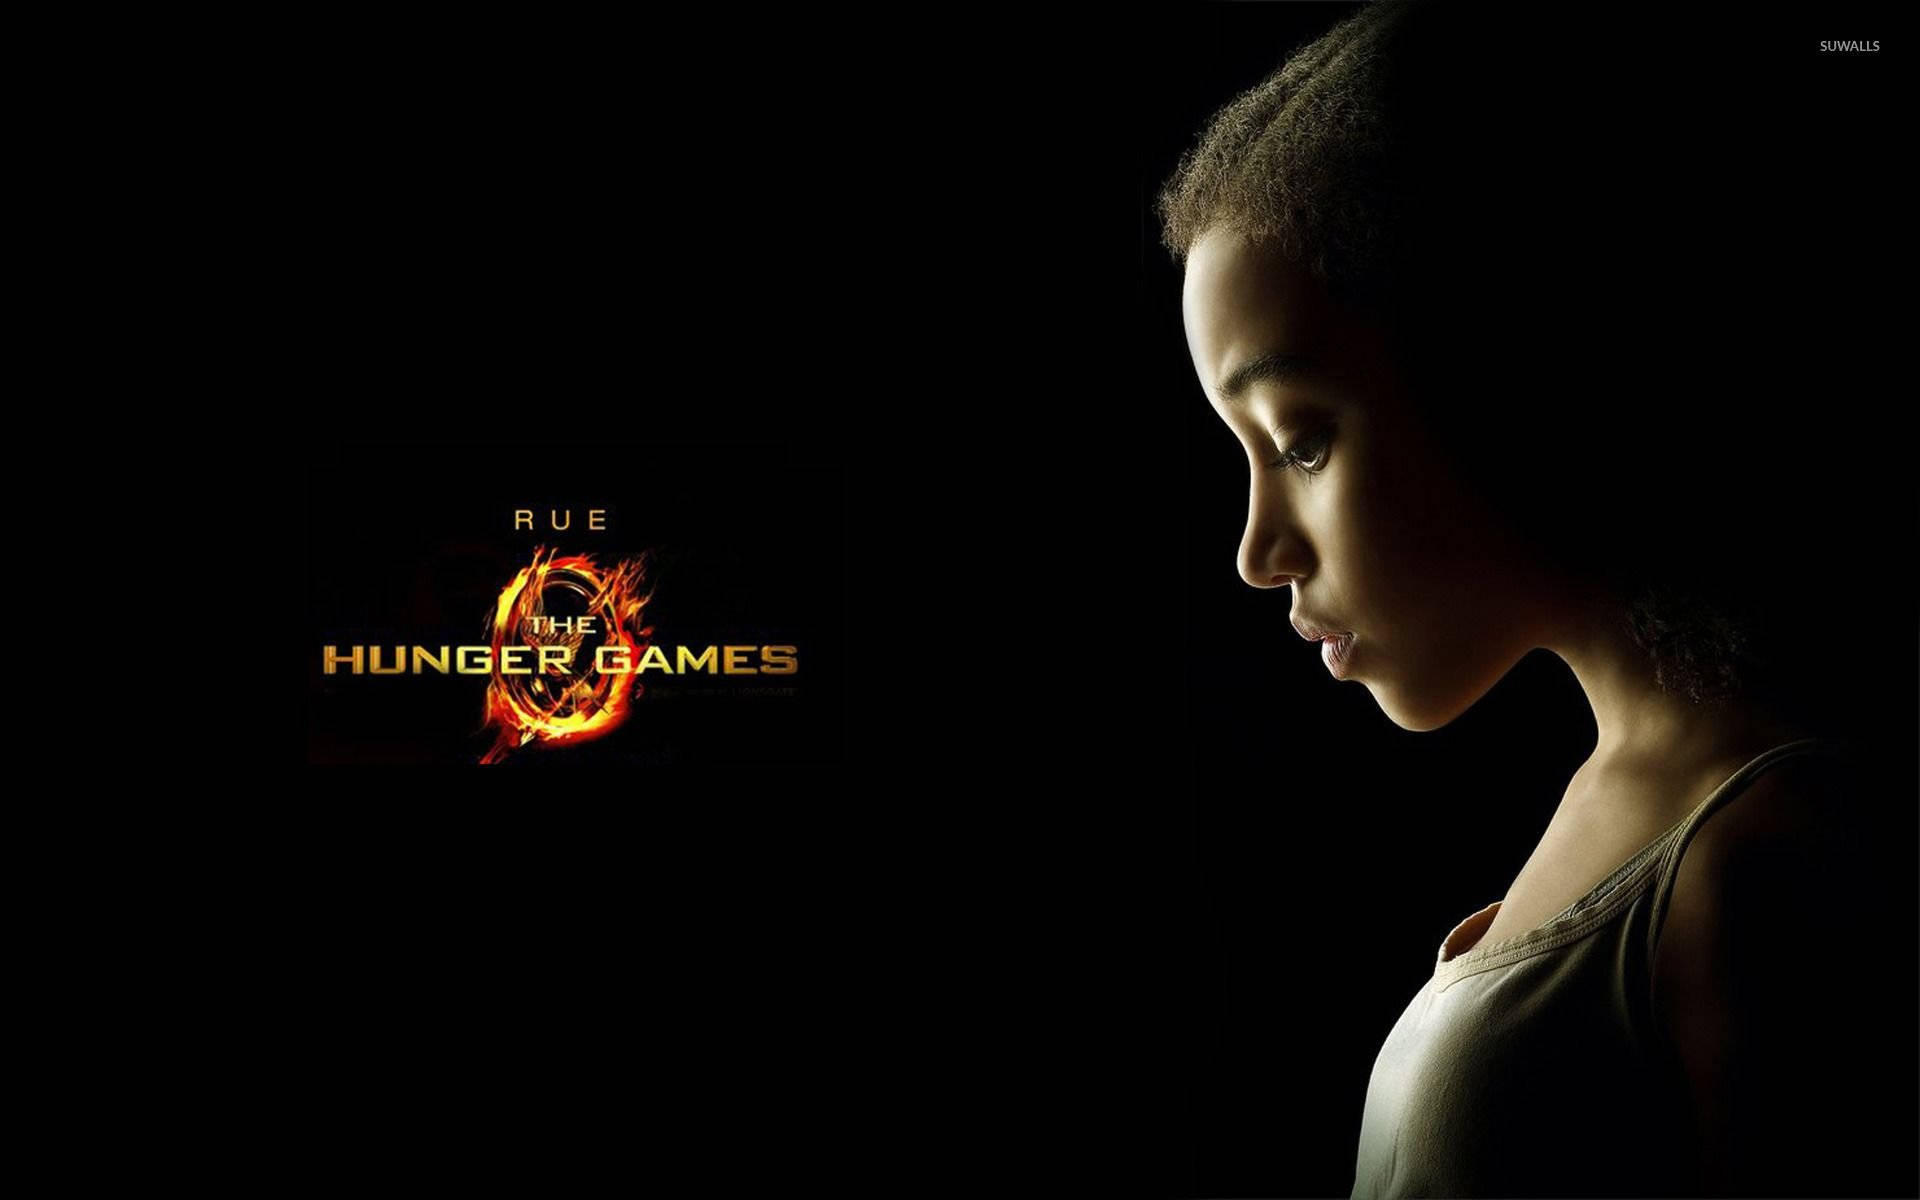 The Hunger Games Rue Poster Wallpaper